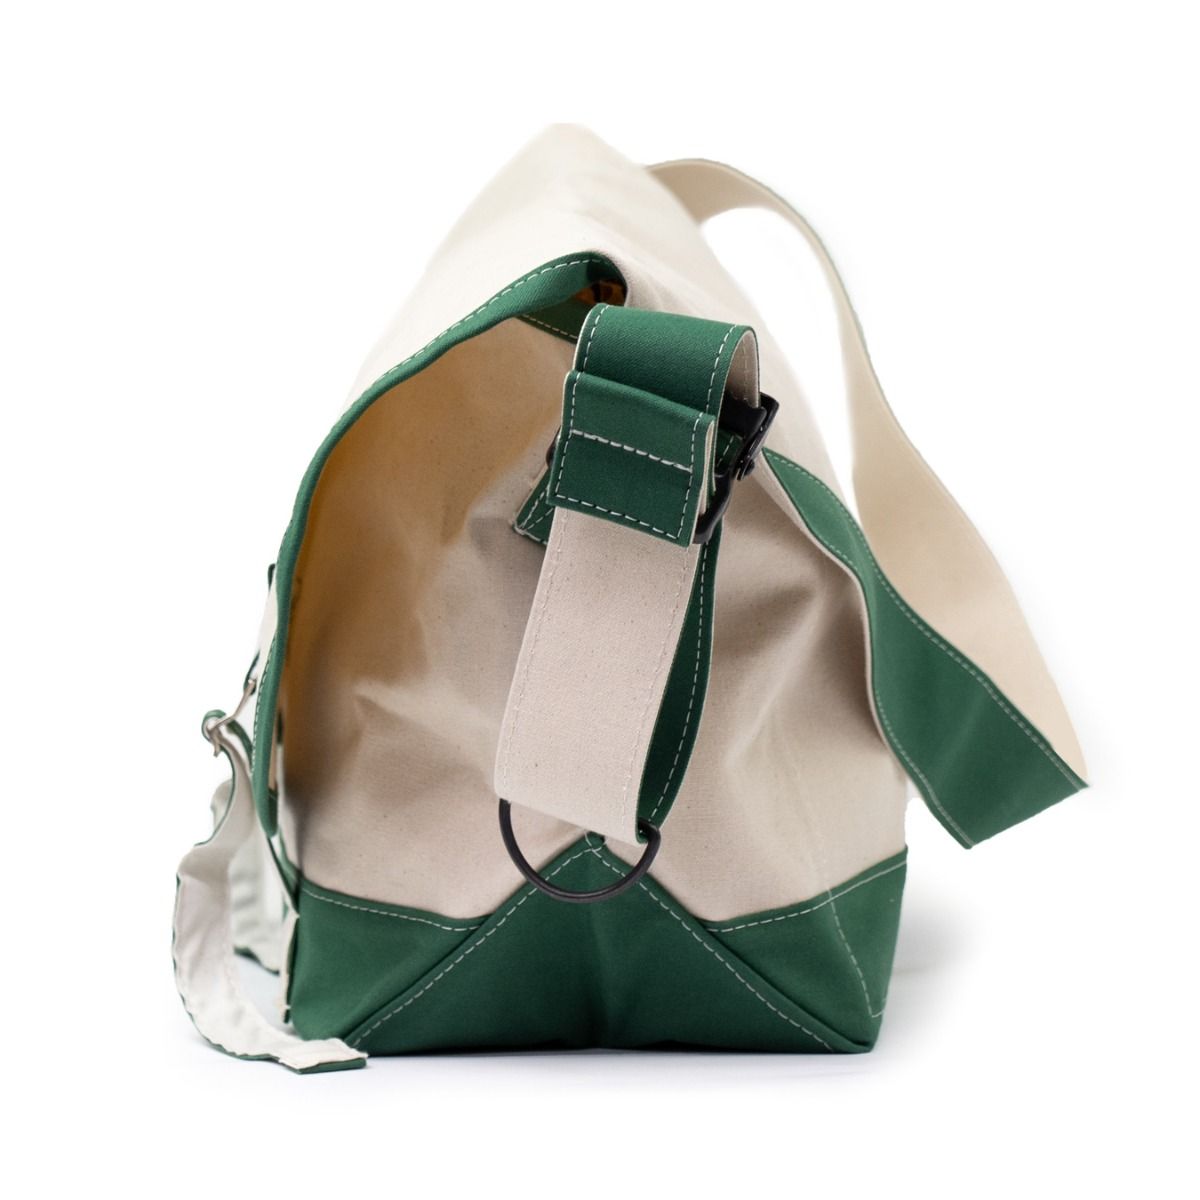 THE INCONVENIENCE STORE×BLUE LUG Messenger Bag - Green